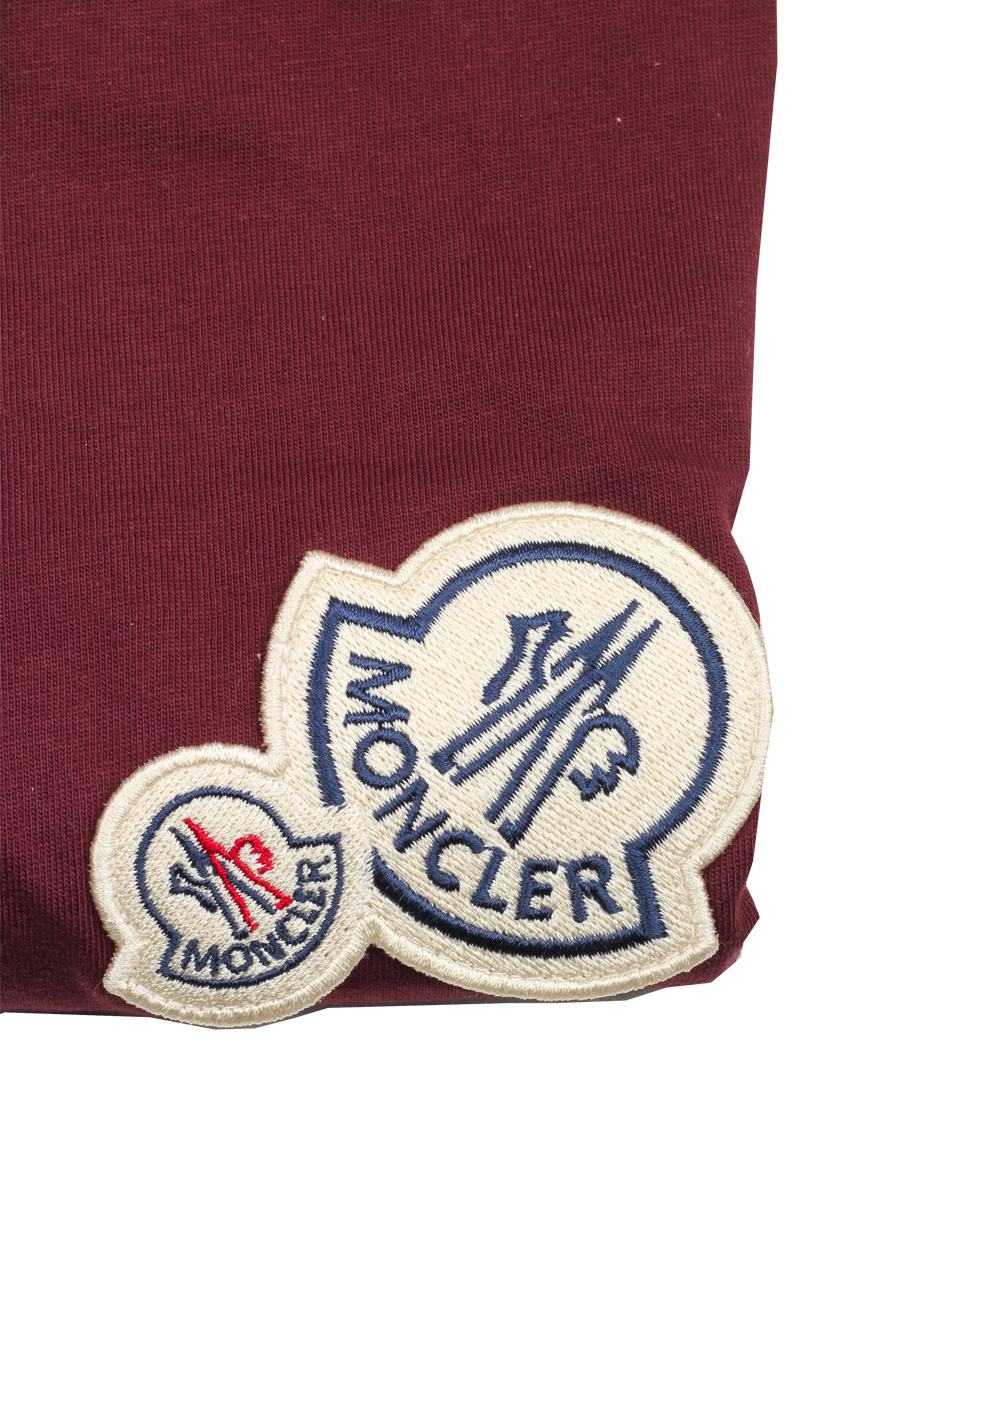 Moncler Red Brand Patch Crew Neck Tee Shirt Size XXL / 44R U.S. | Costume Limité